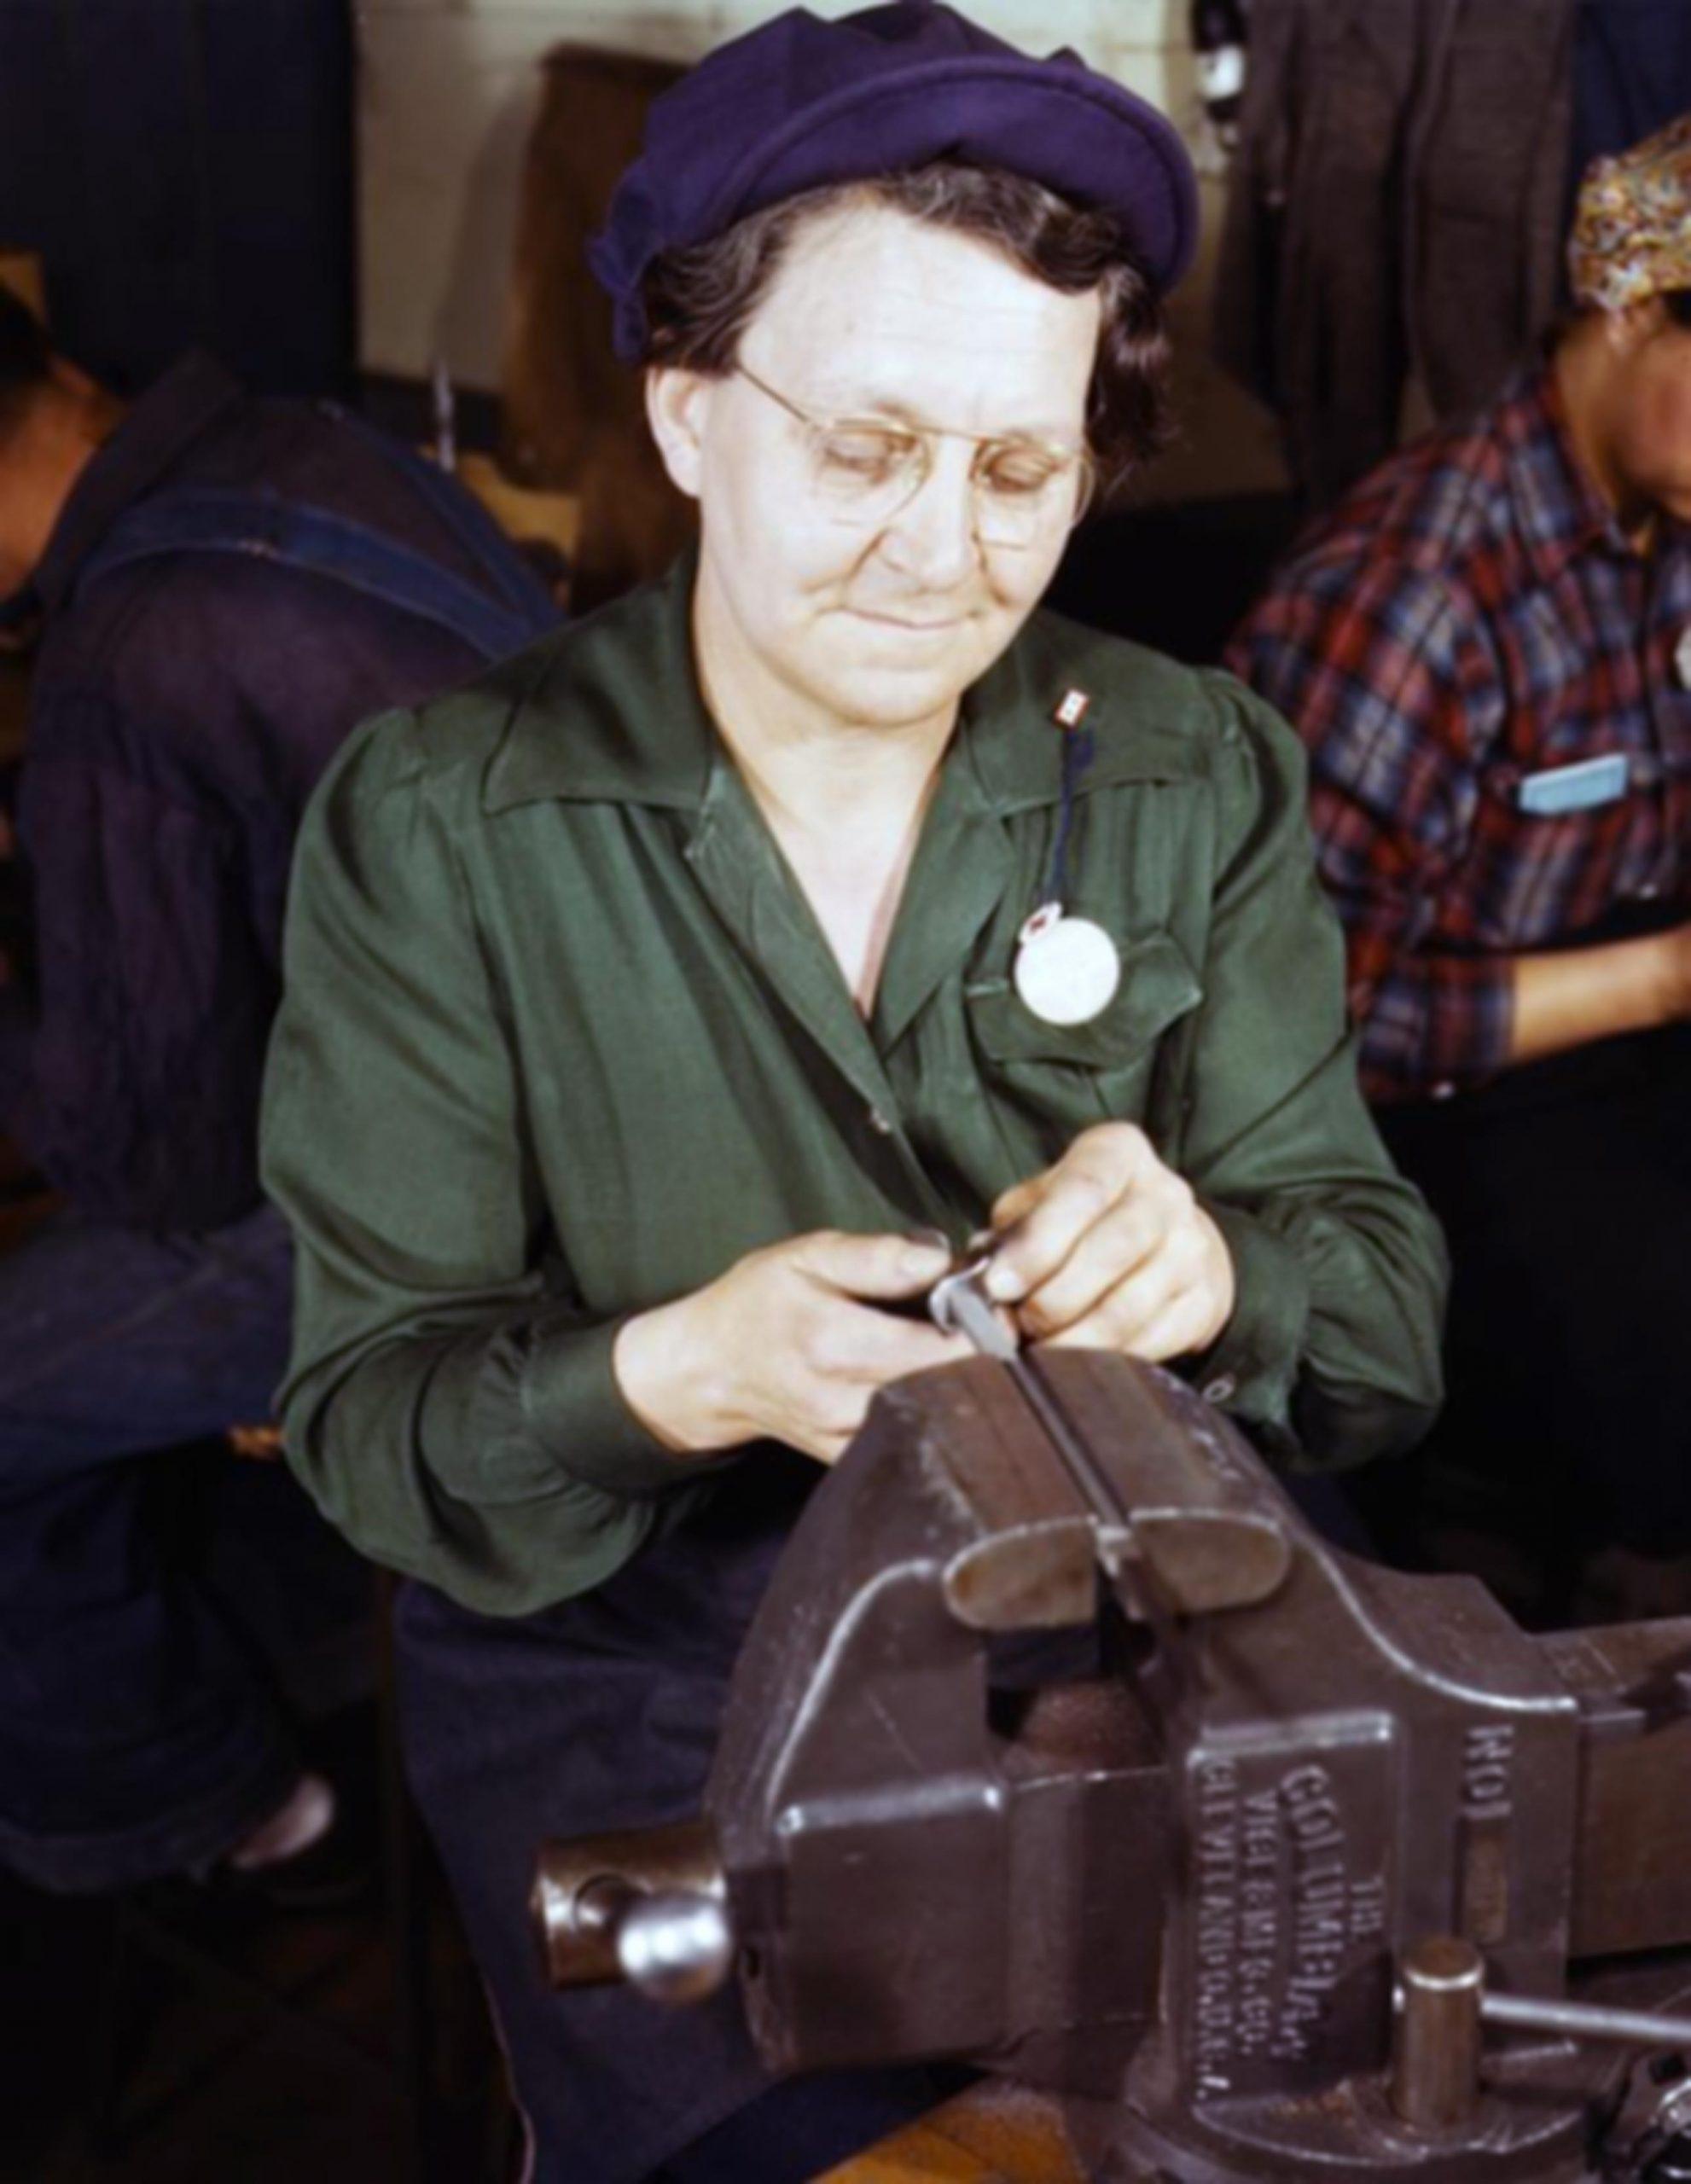 An American female worker